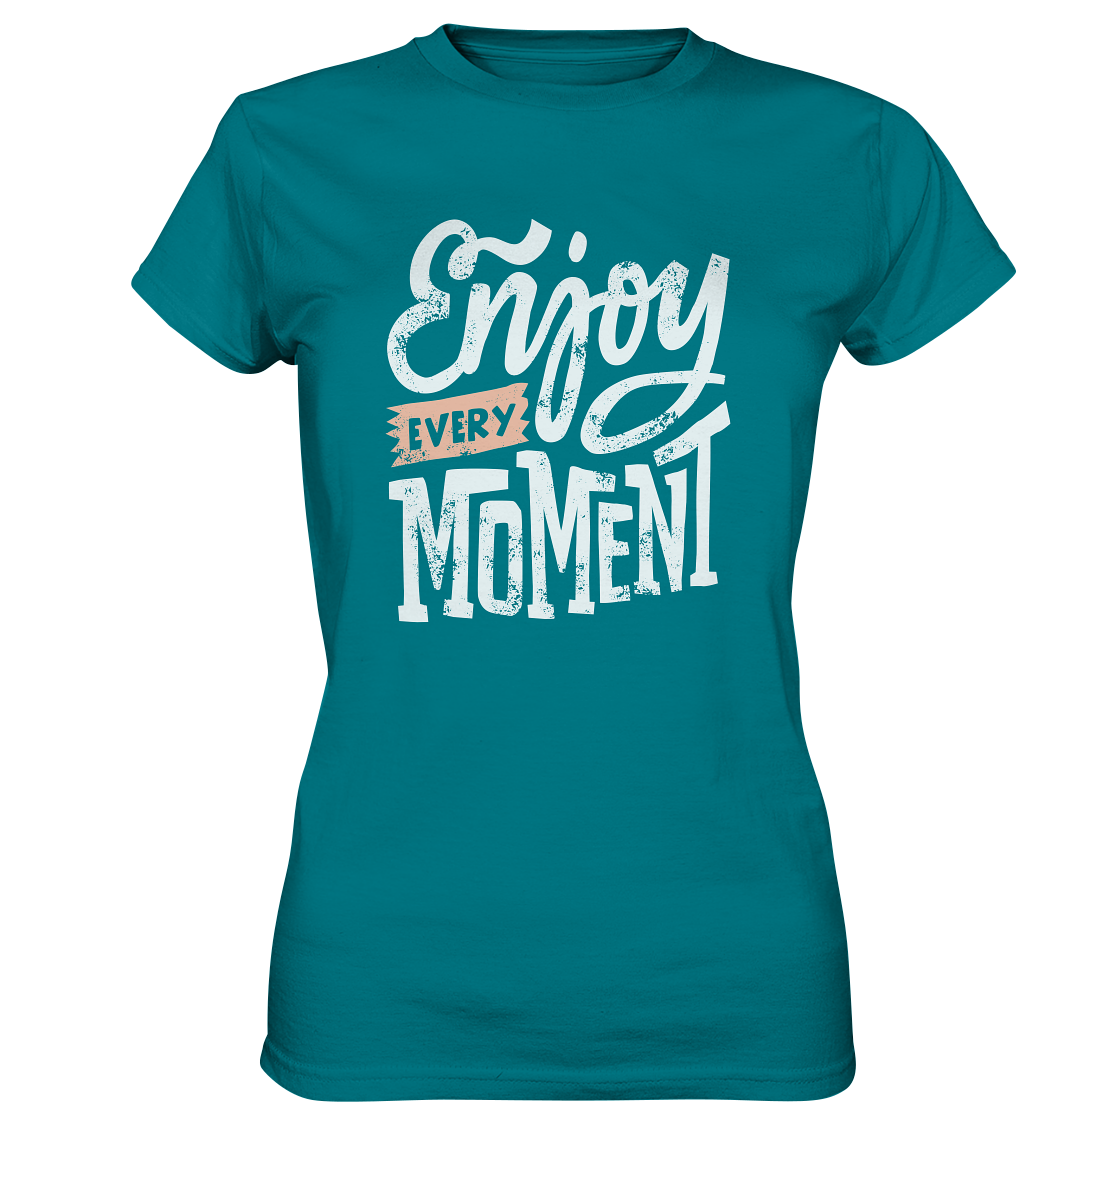 Enjoy every Moment - Ladies Premium Shirt - mehrere Farben